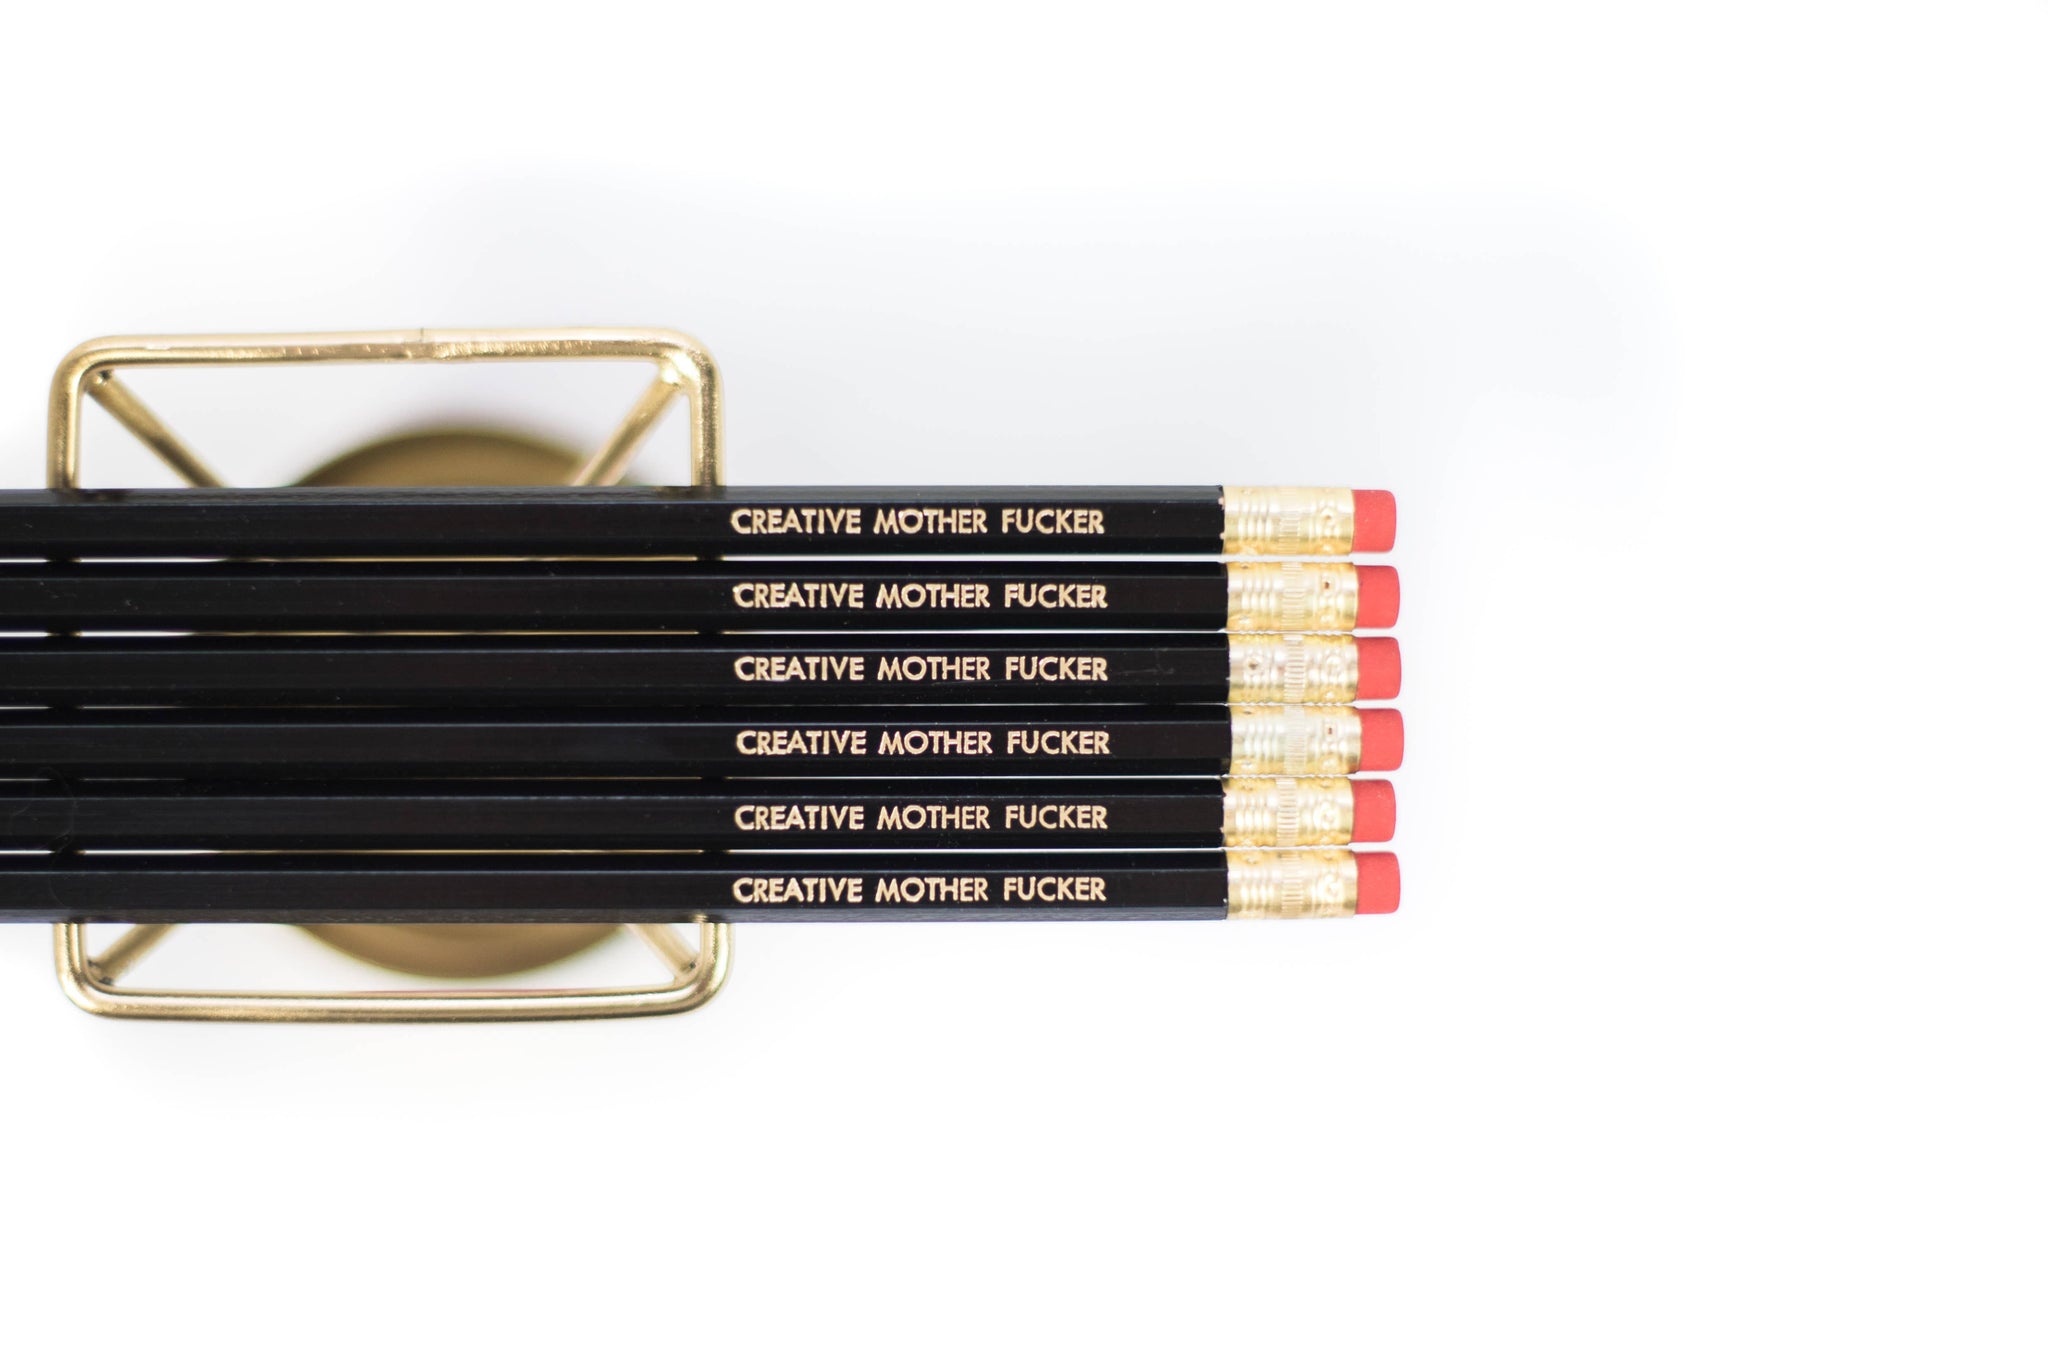 Tiramisu Paperie - Creative Mother Fucker Pencils